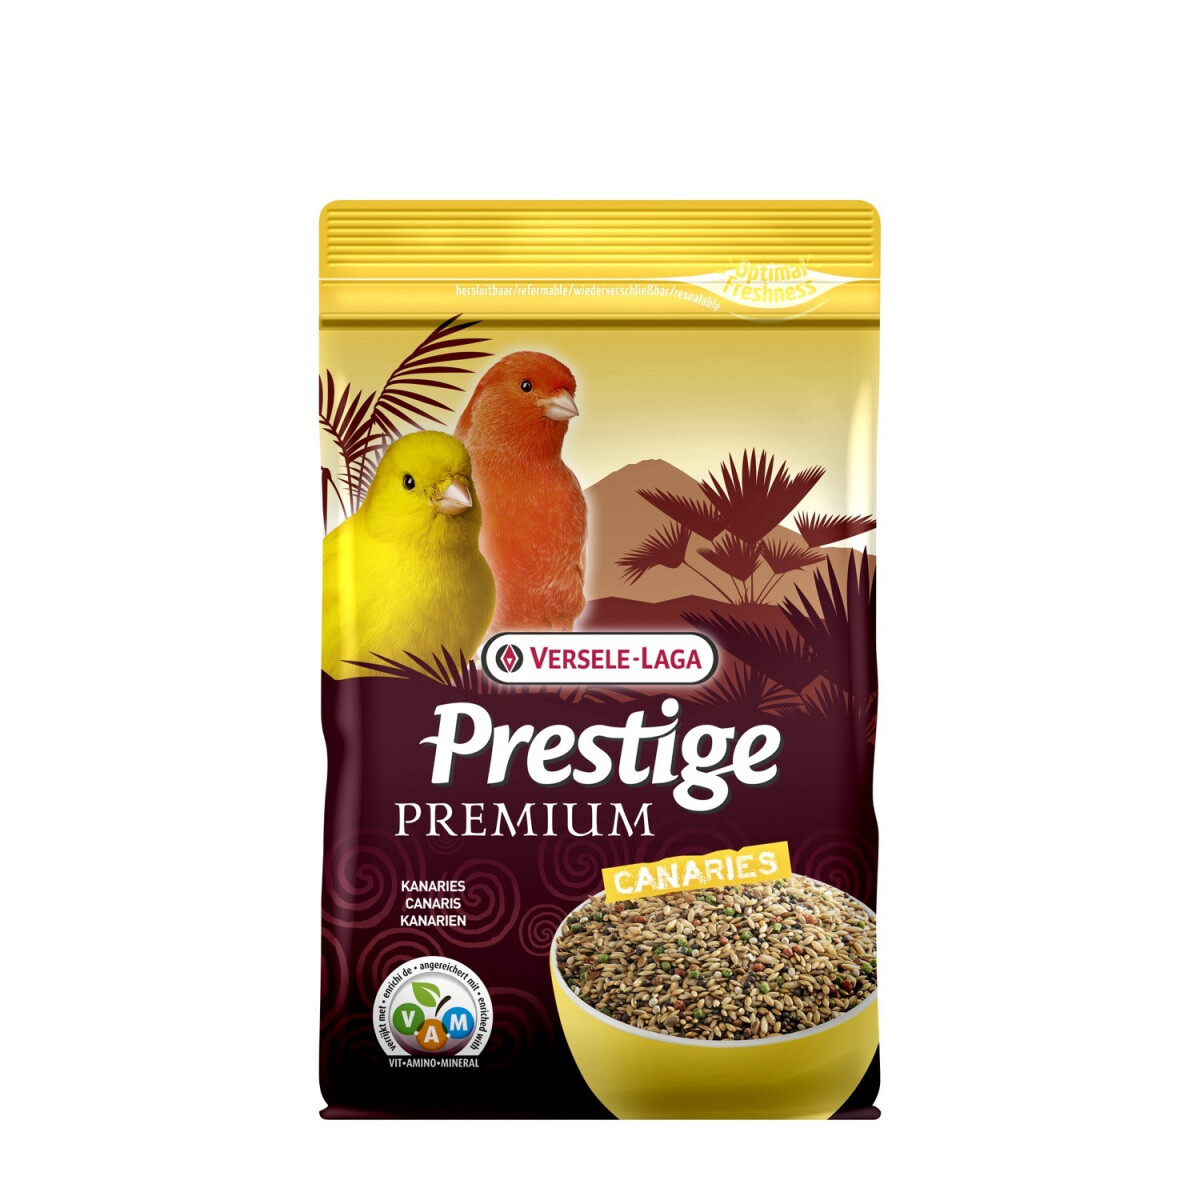 Rb421171 - Premium Prestige Canaries - Serins